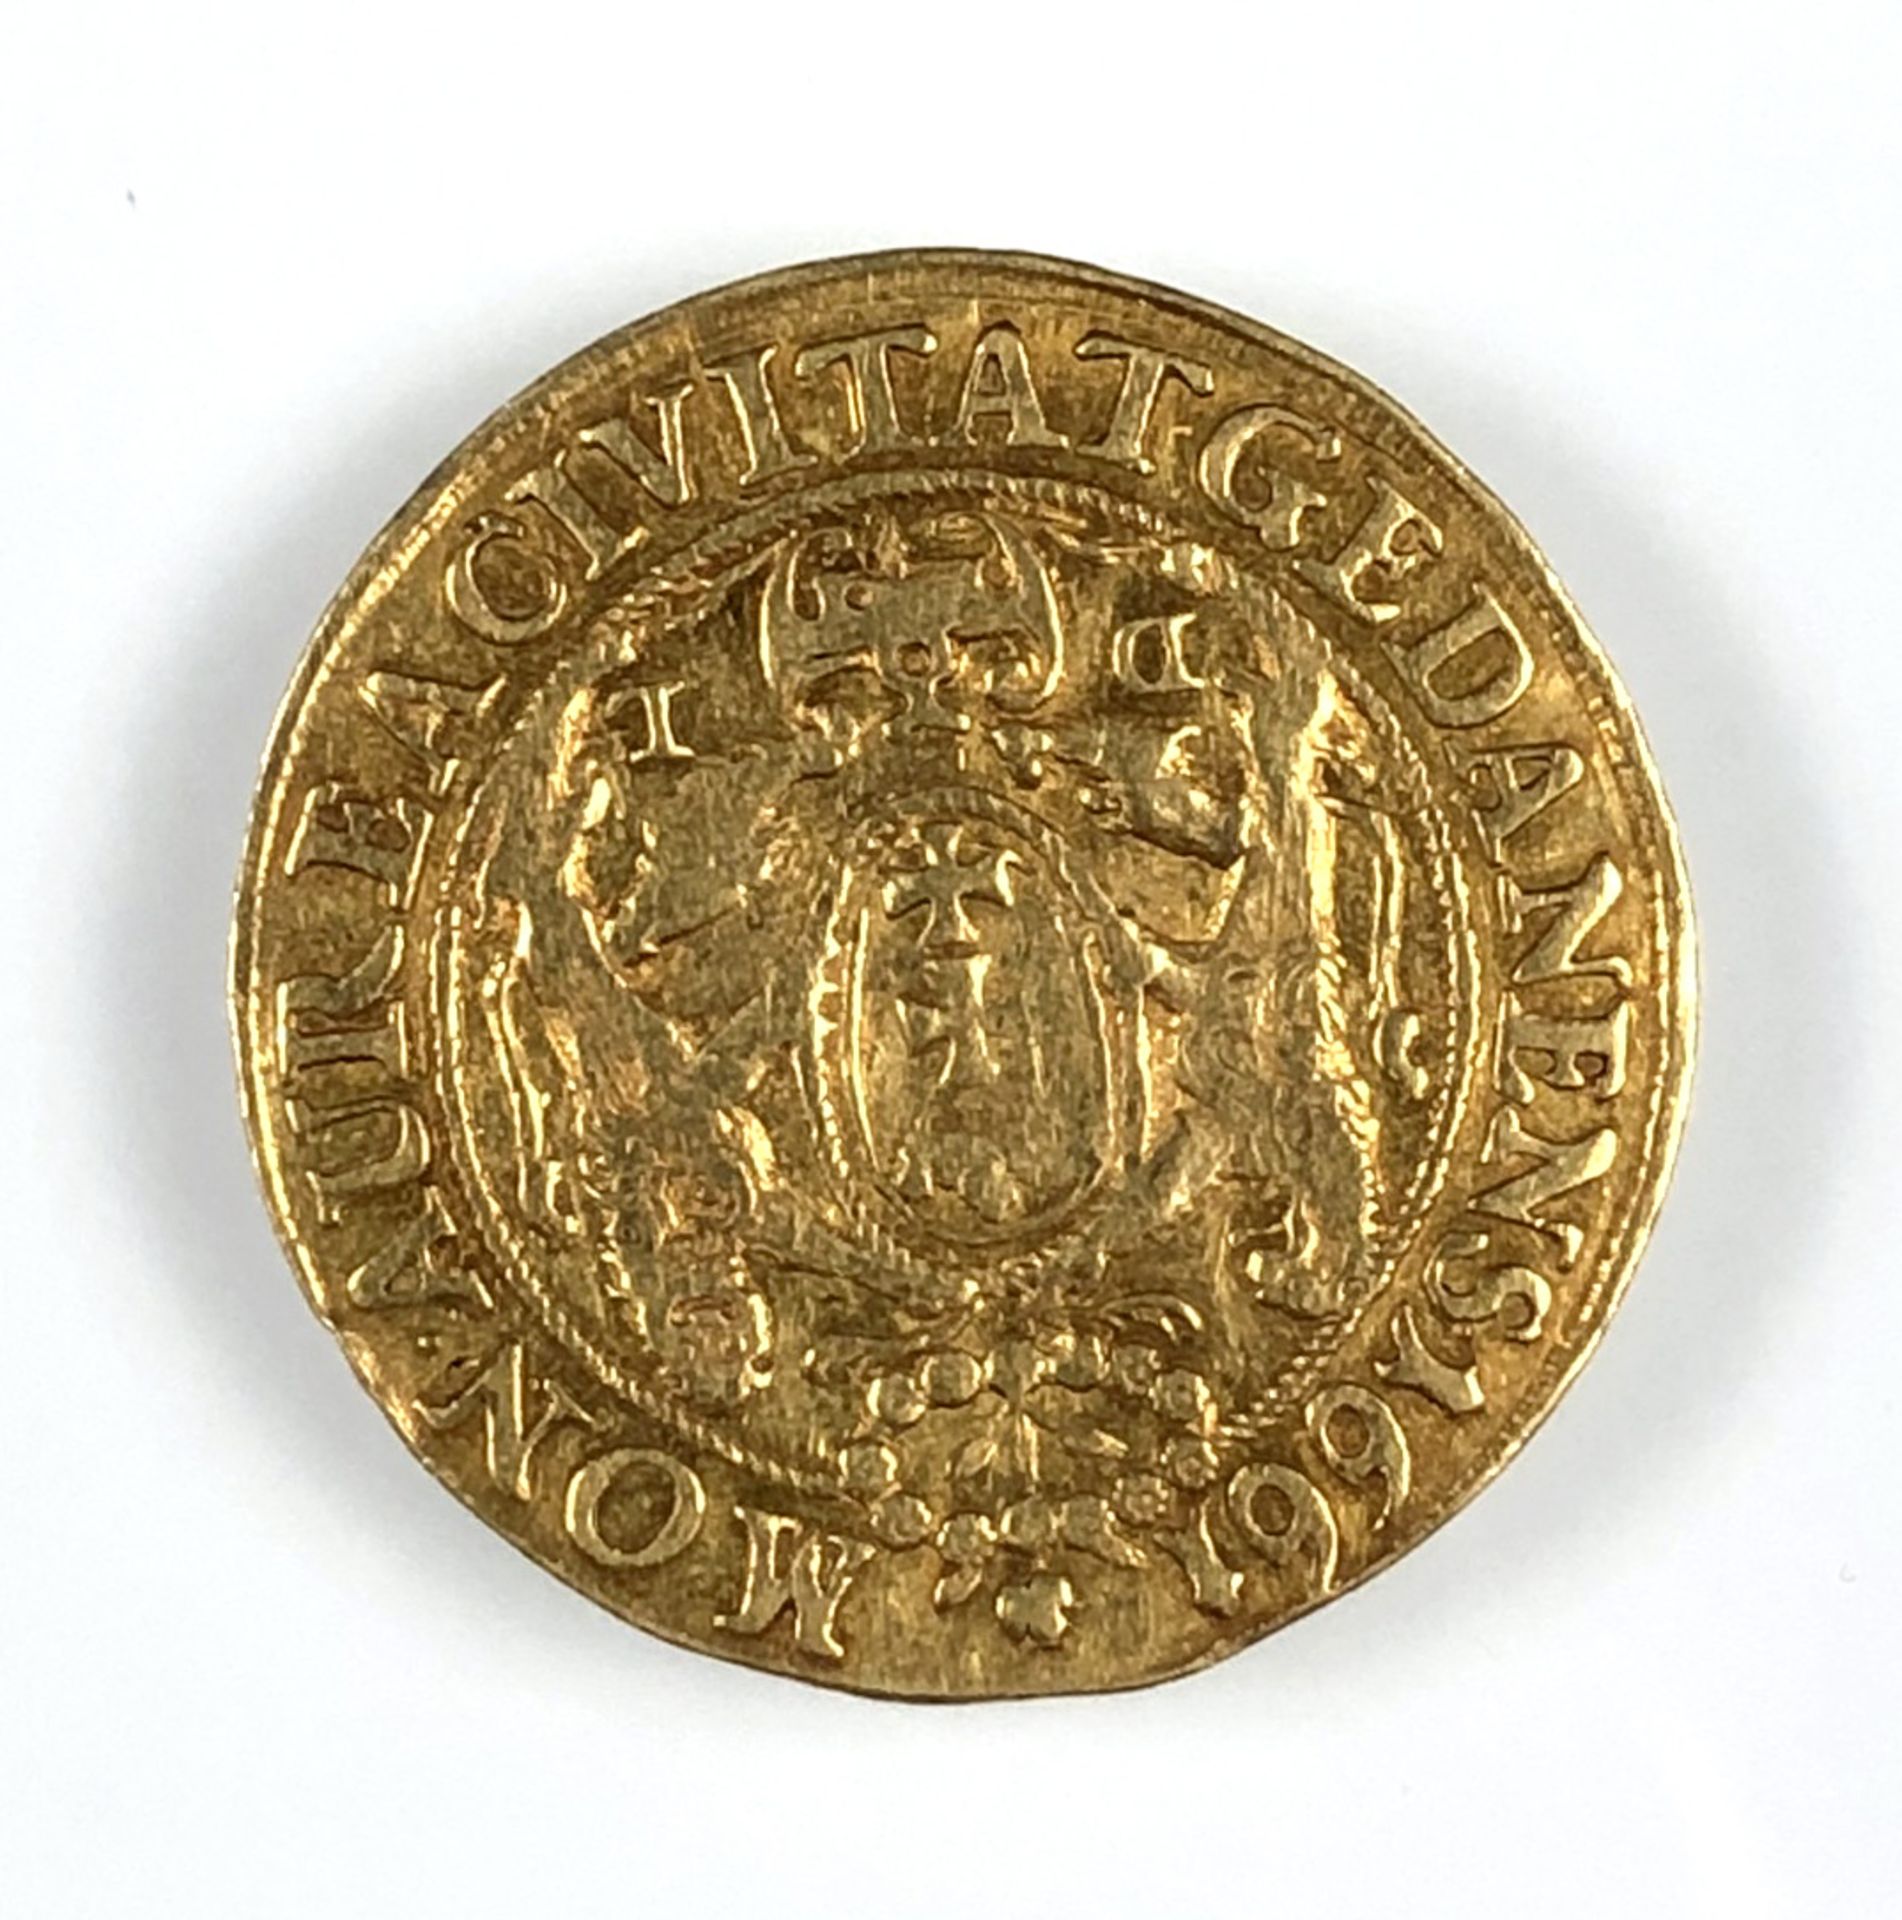 Danzig Dukat 1661 Gold. Johann Kasimir (1649 - 1668).3,4 Gramm. Dutkowski/Suchanek 315 I; Fb. 24;